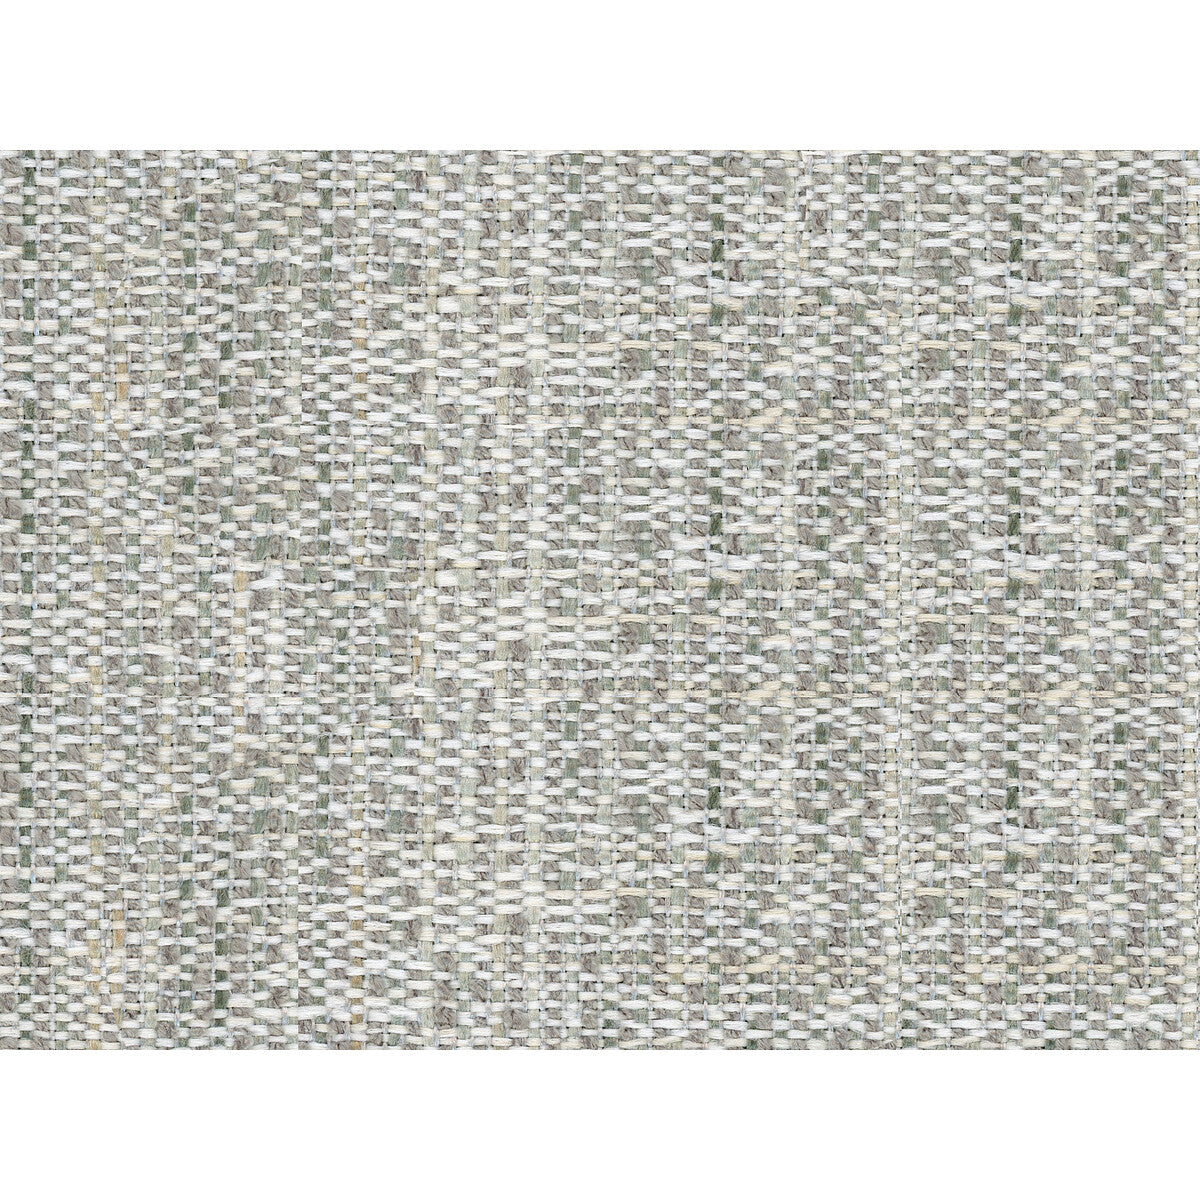 Kravet Smart fabric in 34331-1611 color - pattern 34331.1611.0 - by Kravet Smart